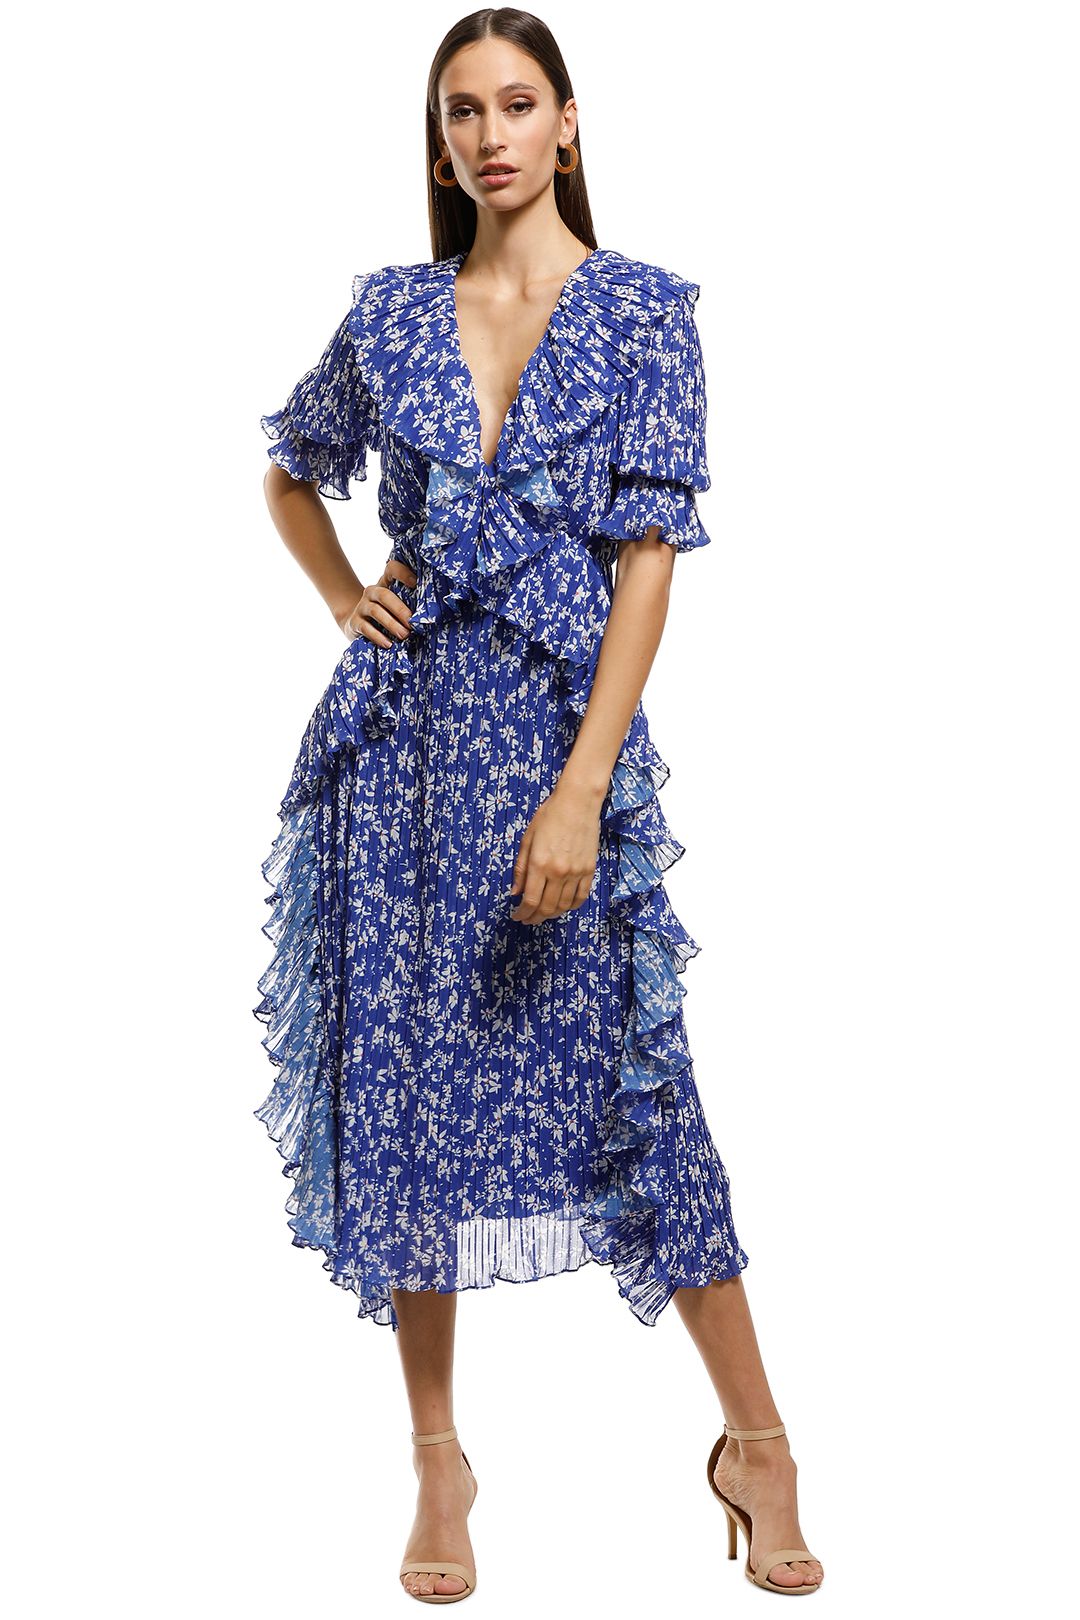 Talulah - Mediterranean Minx Midi Dress - Blue Floral - Front